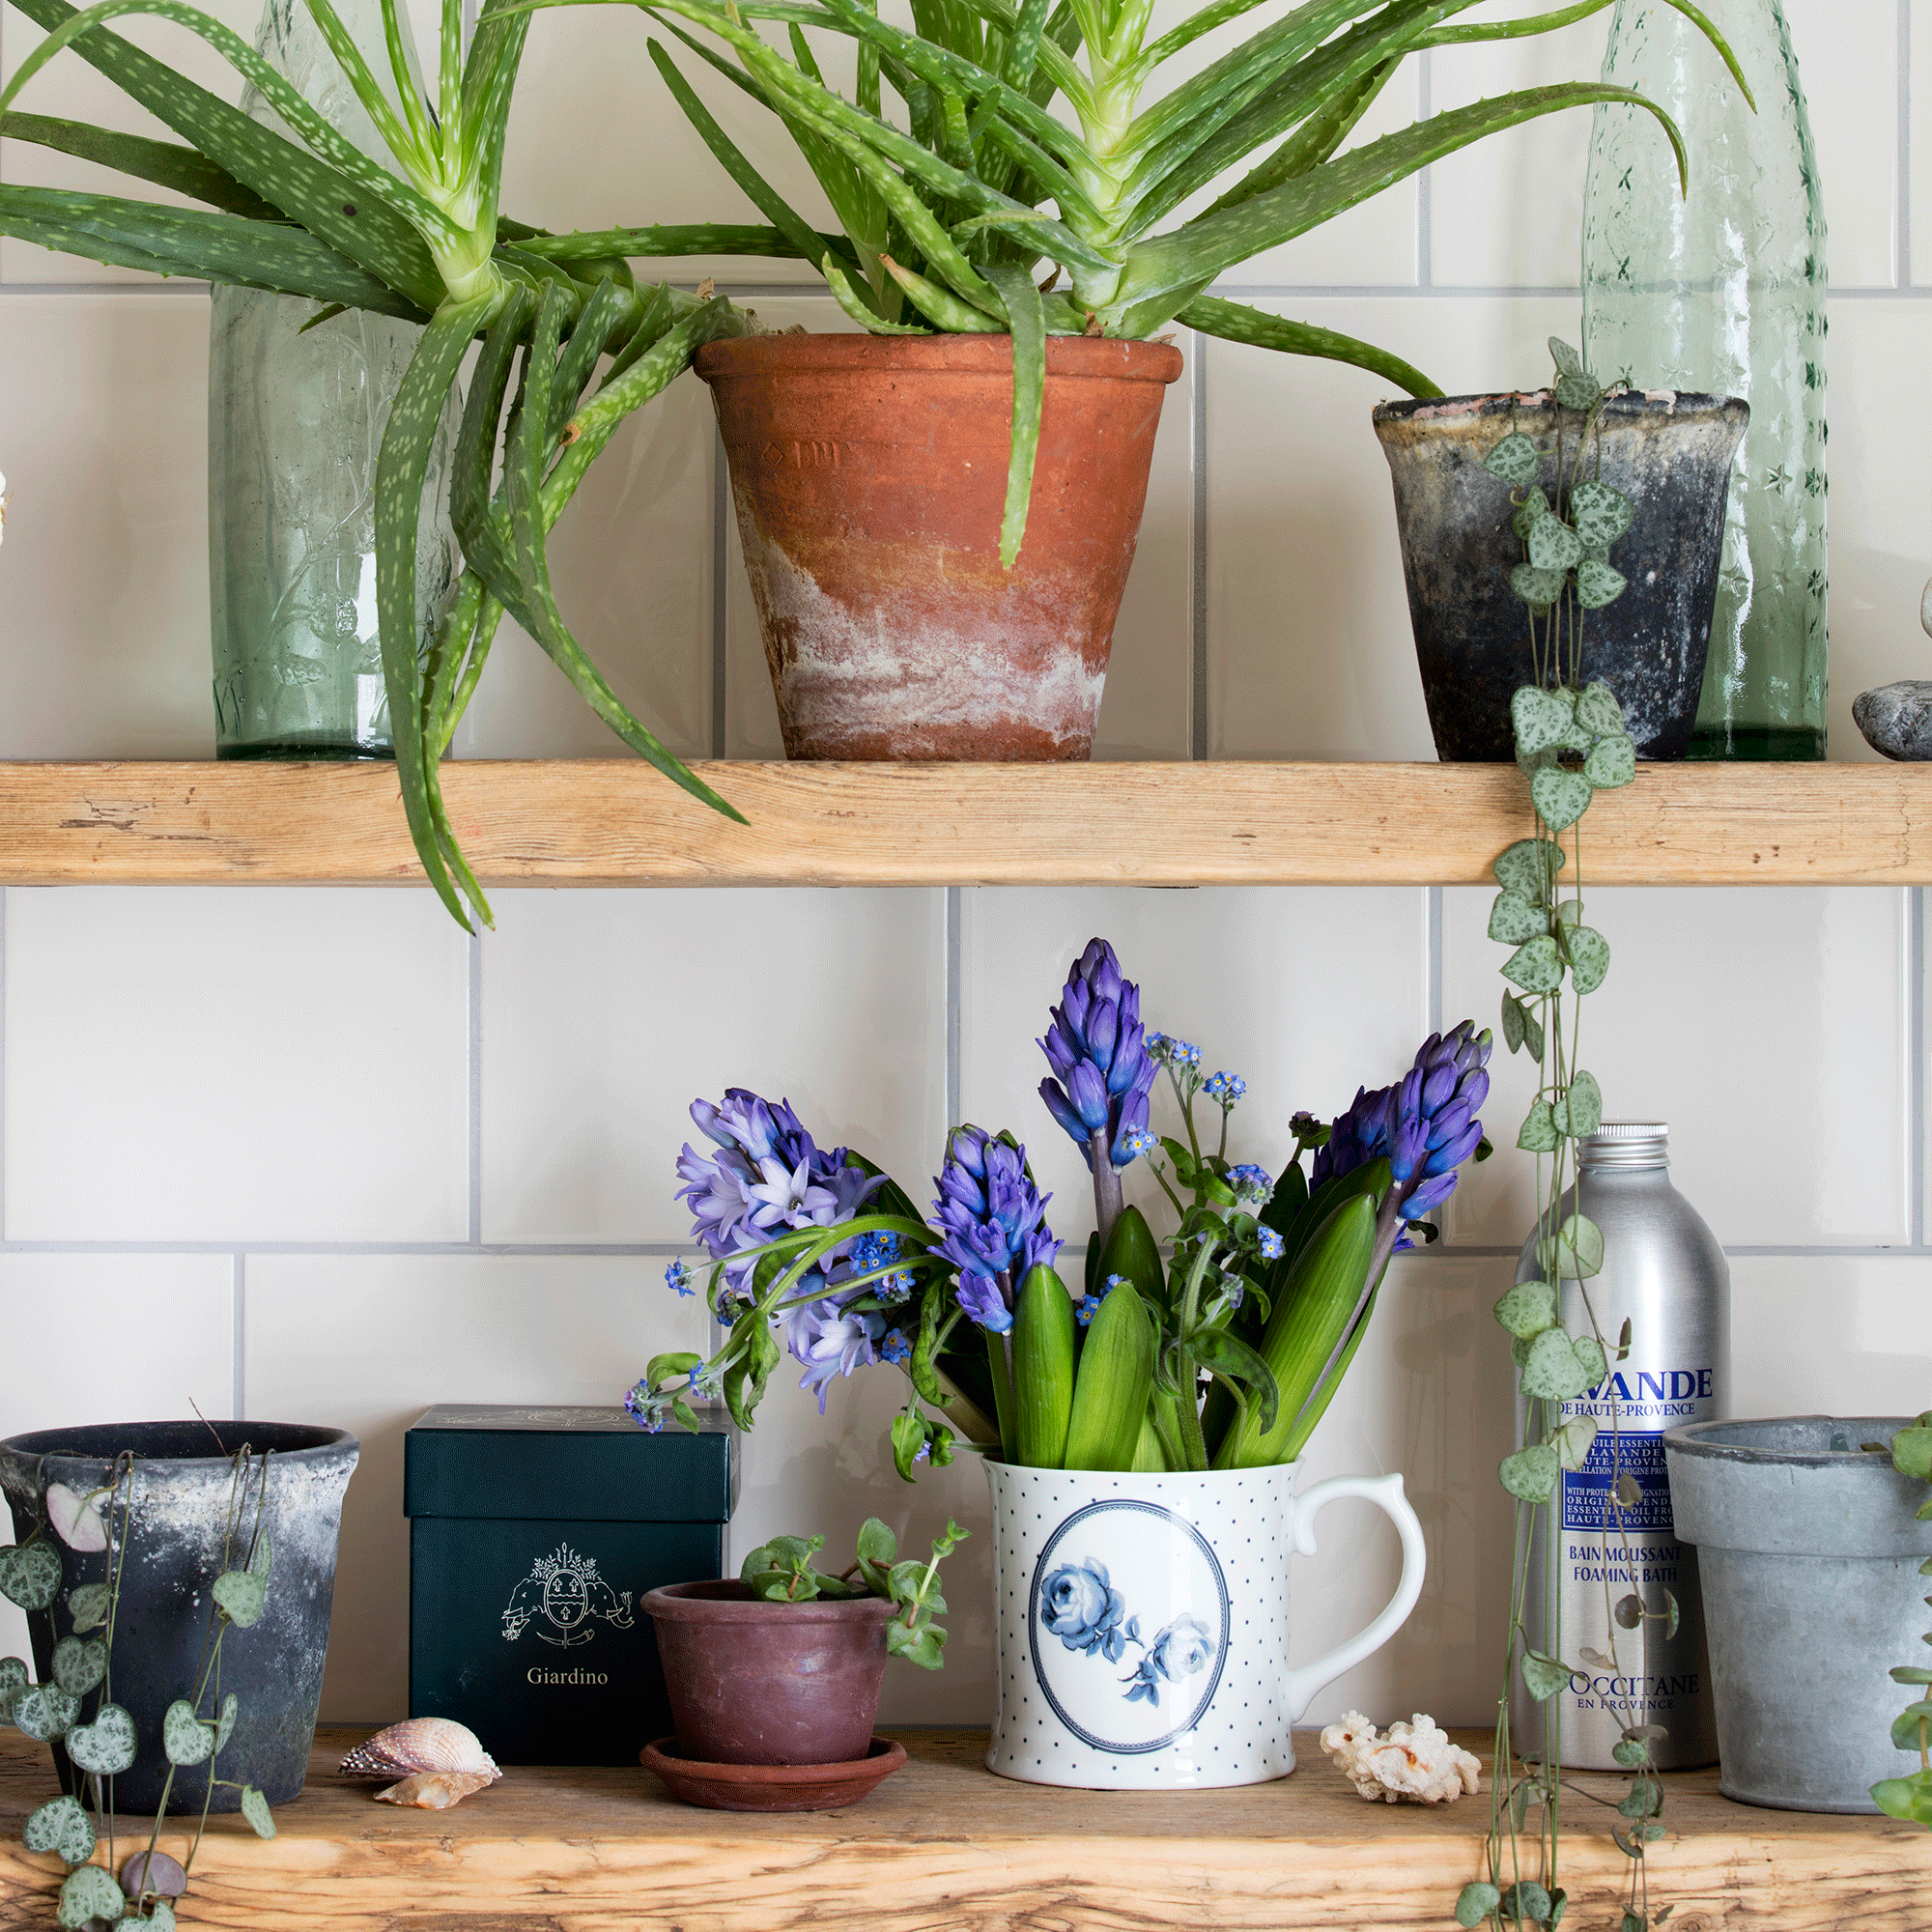 Houseplants in pots on wooden shelves